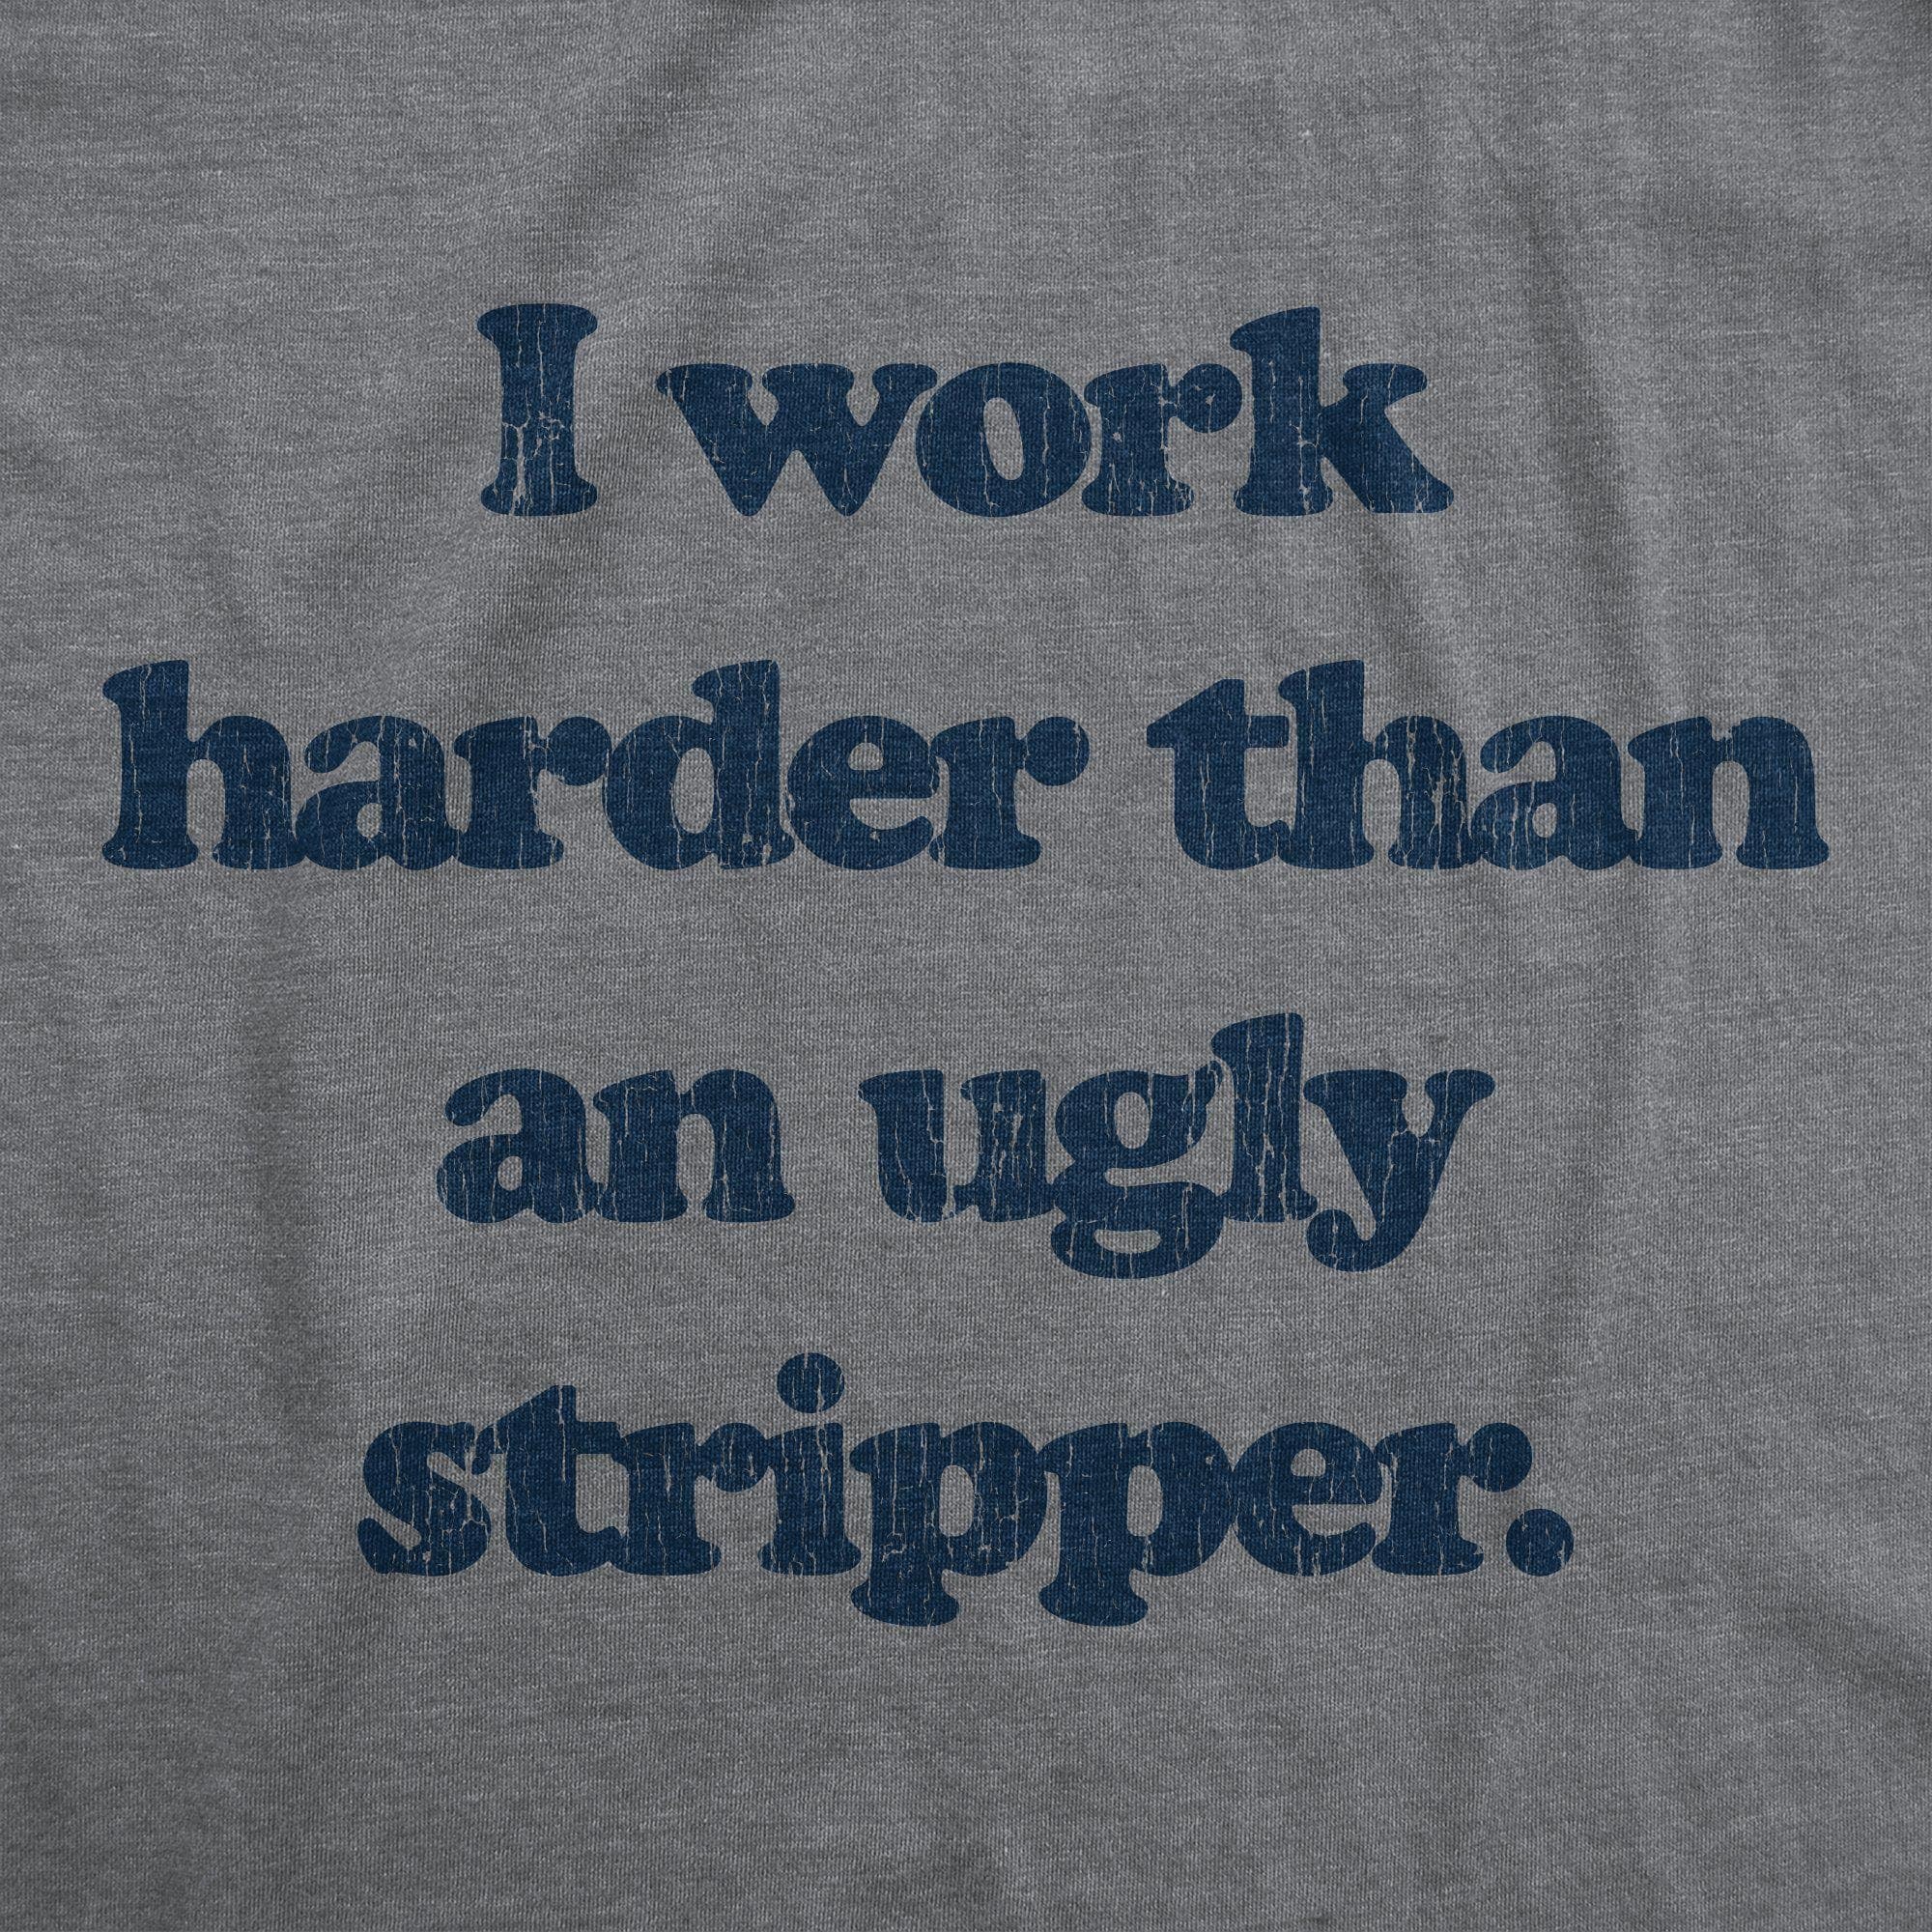 I Work Harder Than An Ugly Stripper Women's Tshirt - Crazy Dog T-Shirts